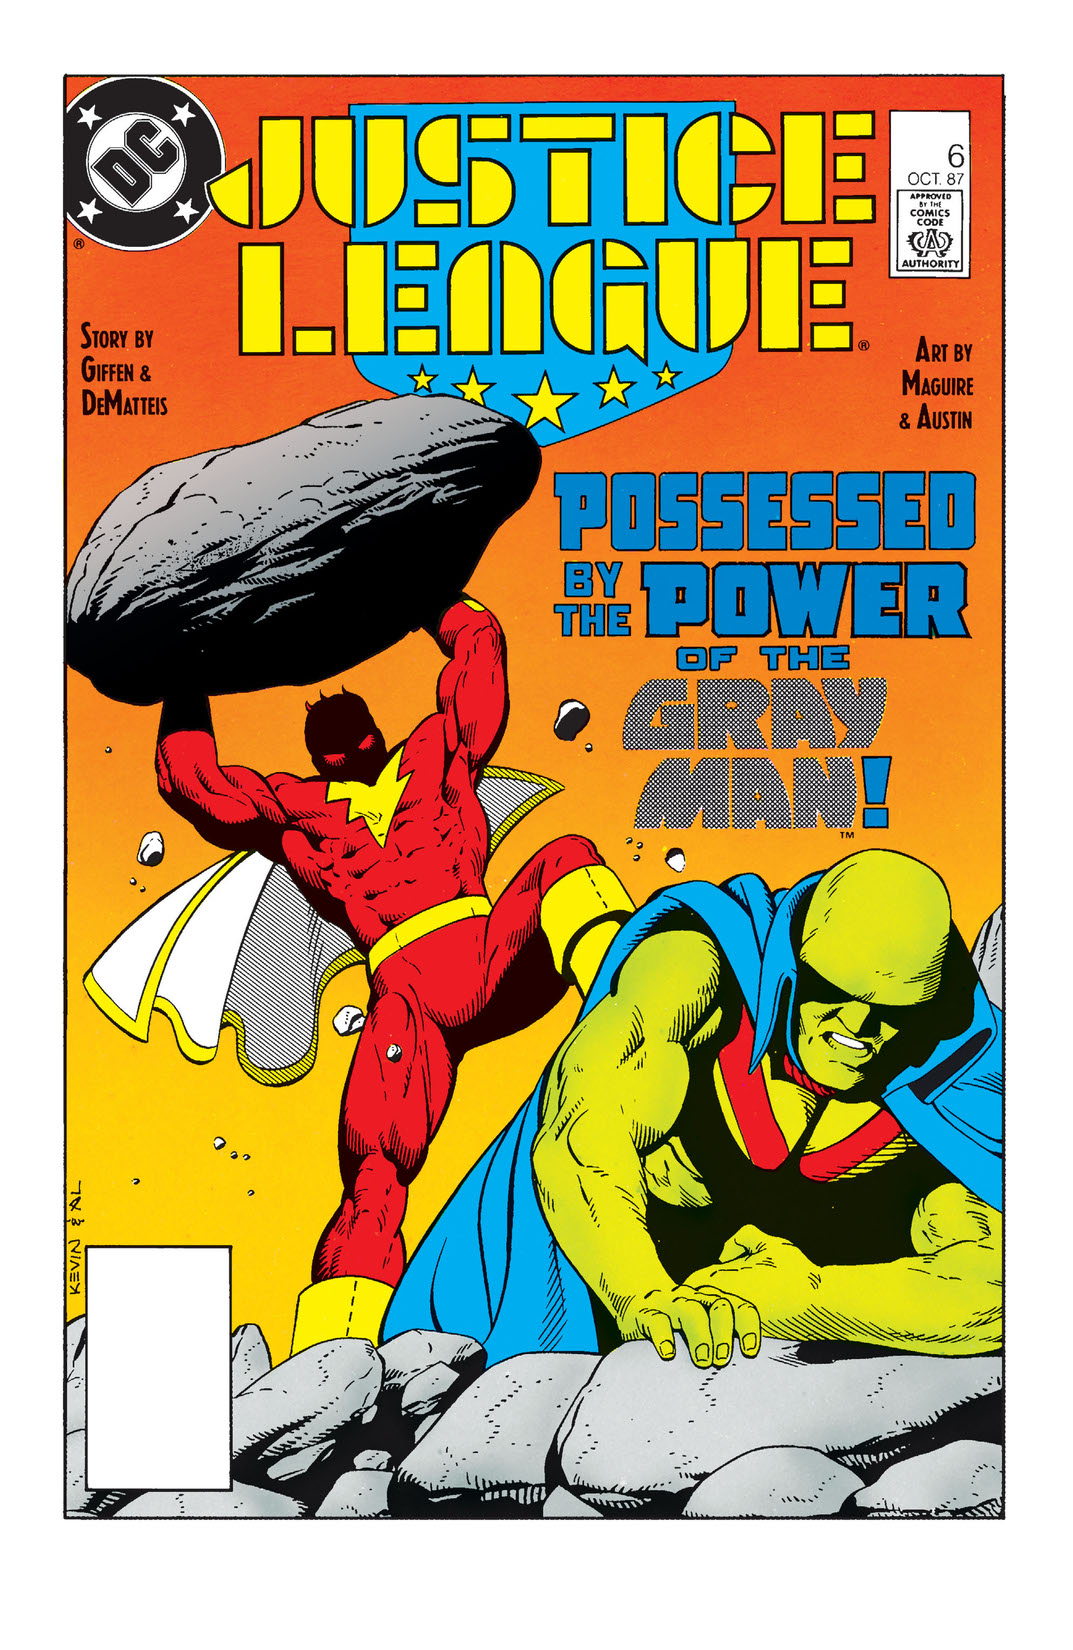 Justice League (1987-1996) #6 preview images